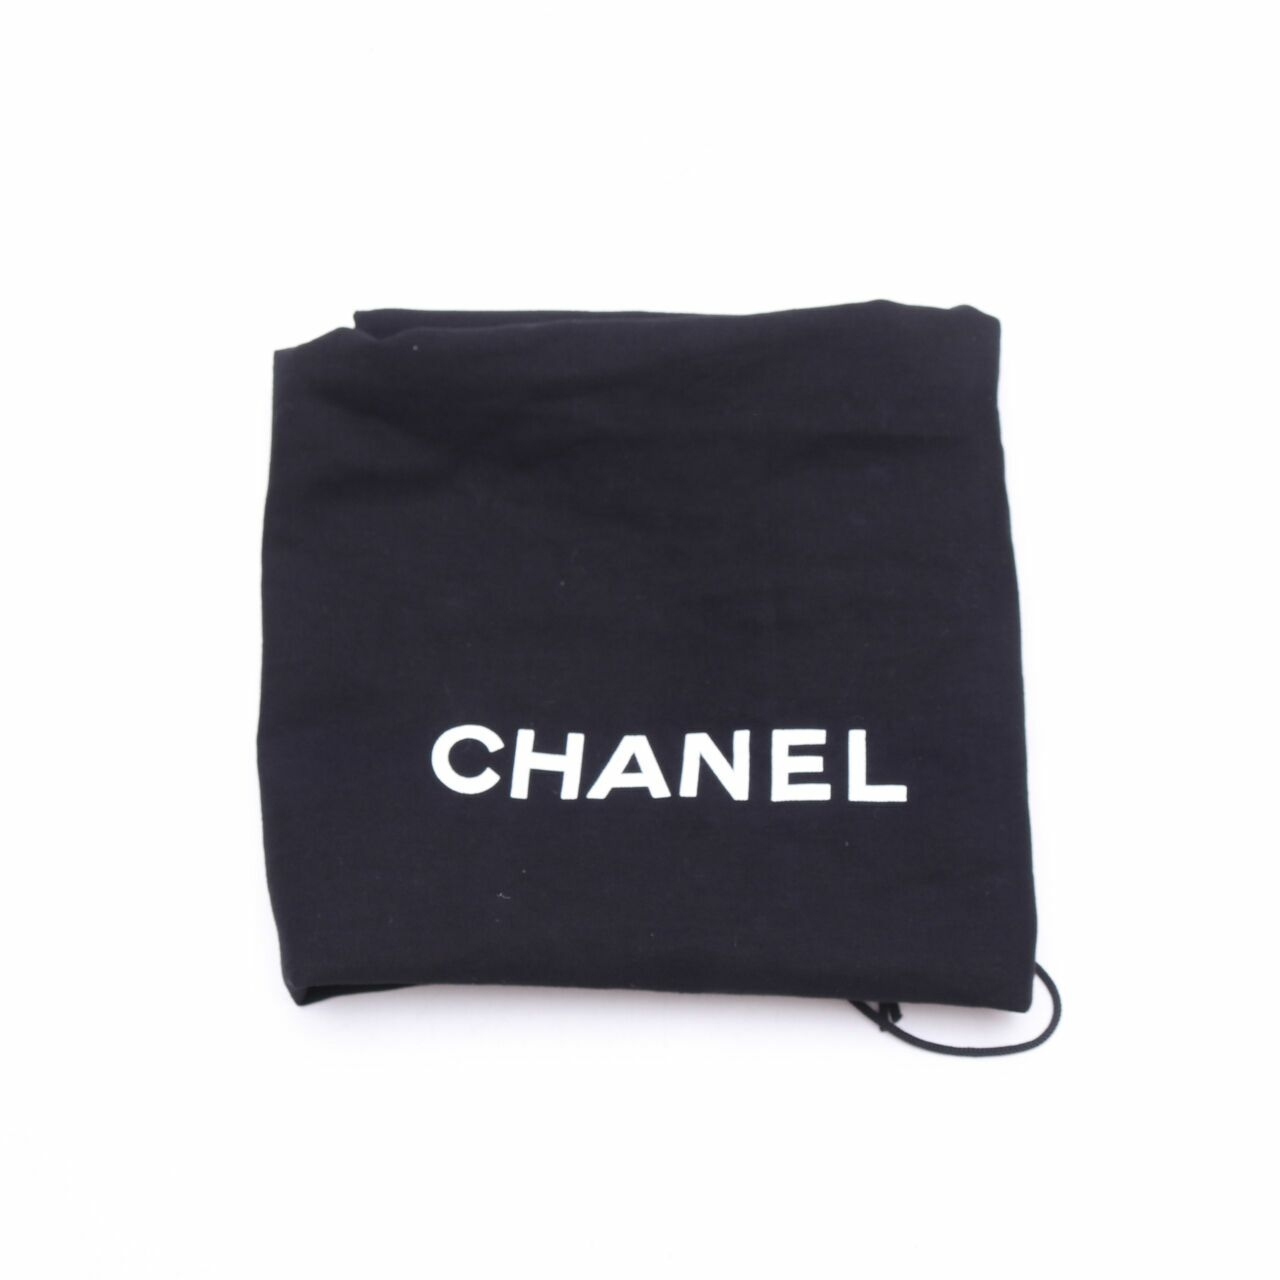  Chanel Beige/Black Caviar Tote Bag